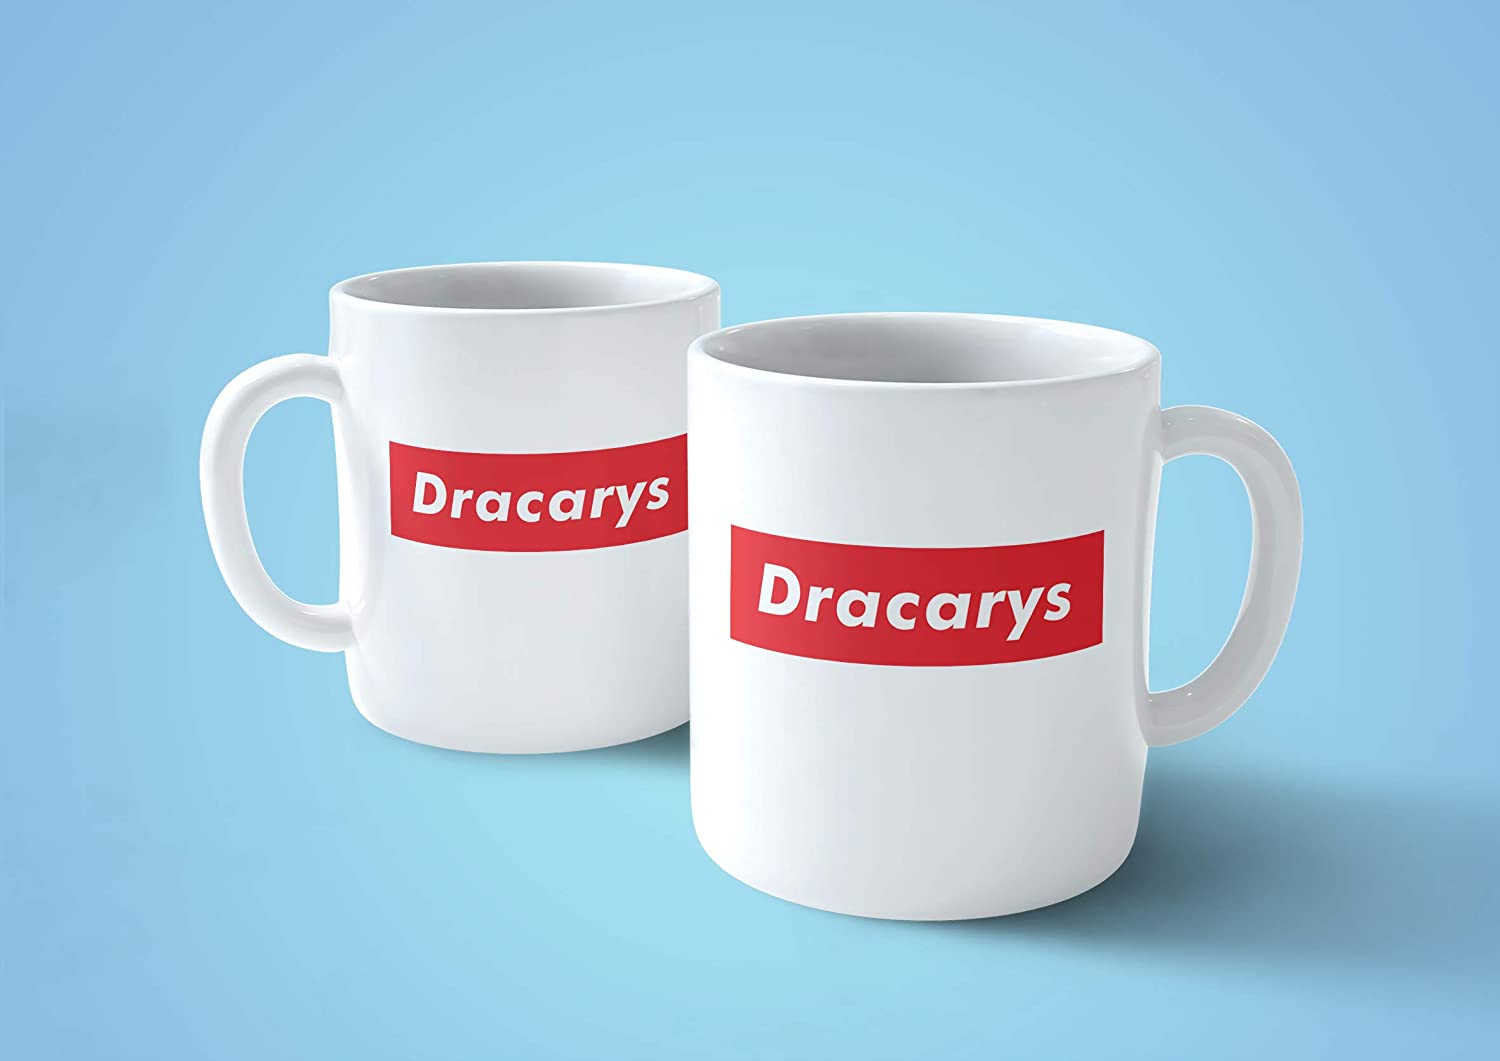 Firebrick Tazza Dracarys - Mug Drago Got - Choose Ur Color Cuc shop